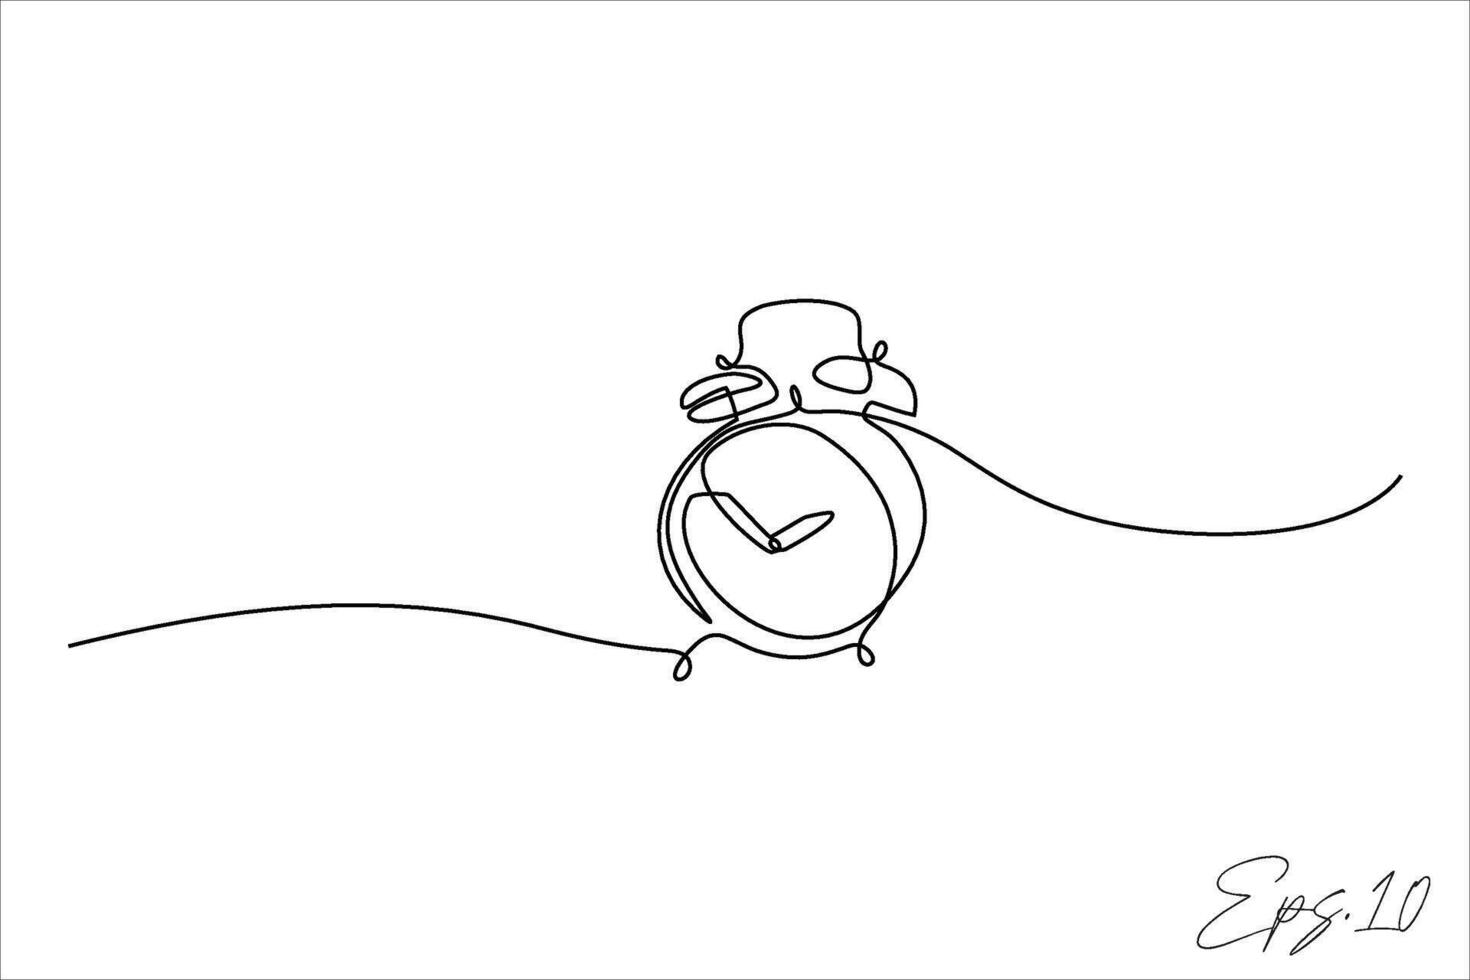 kontinuerlig linje vektor illustration design av larm klocka